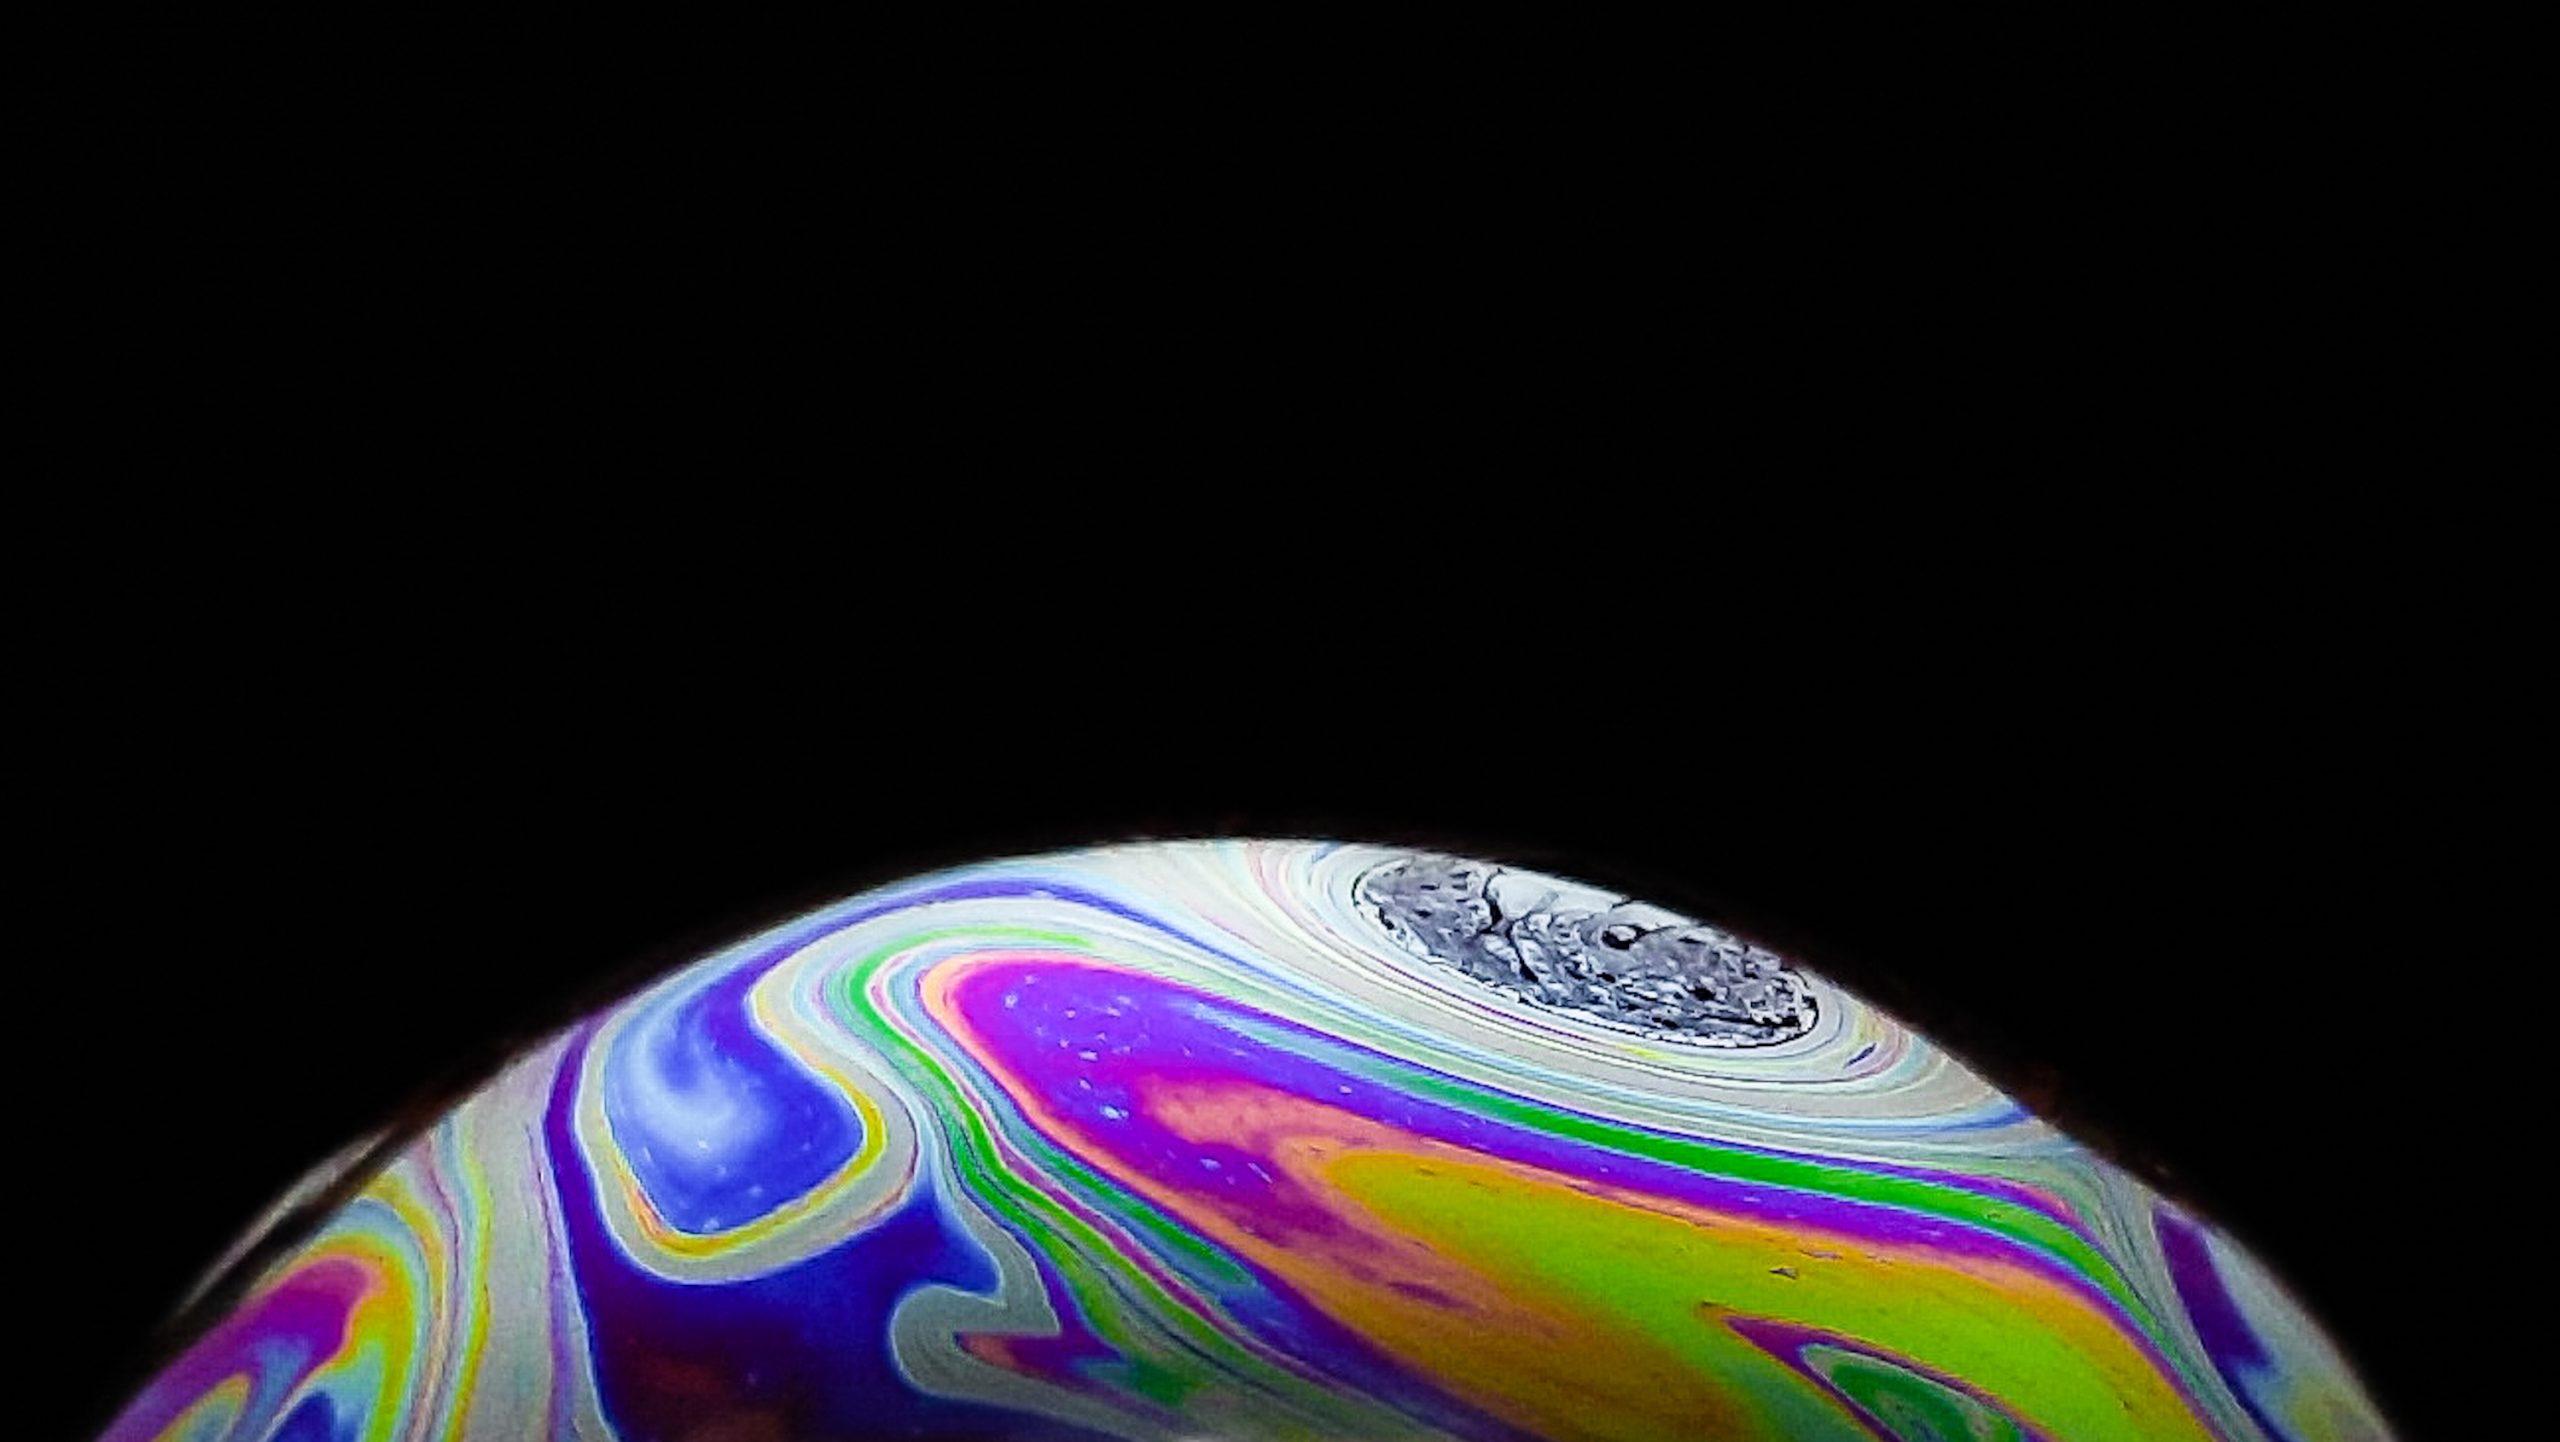 Pattern of a soap bubble